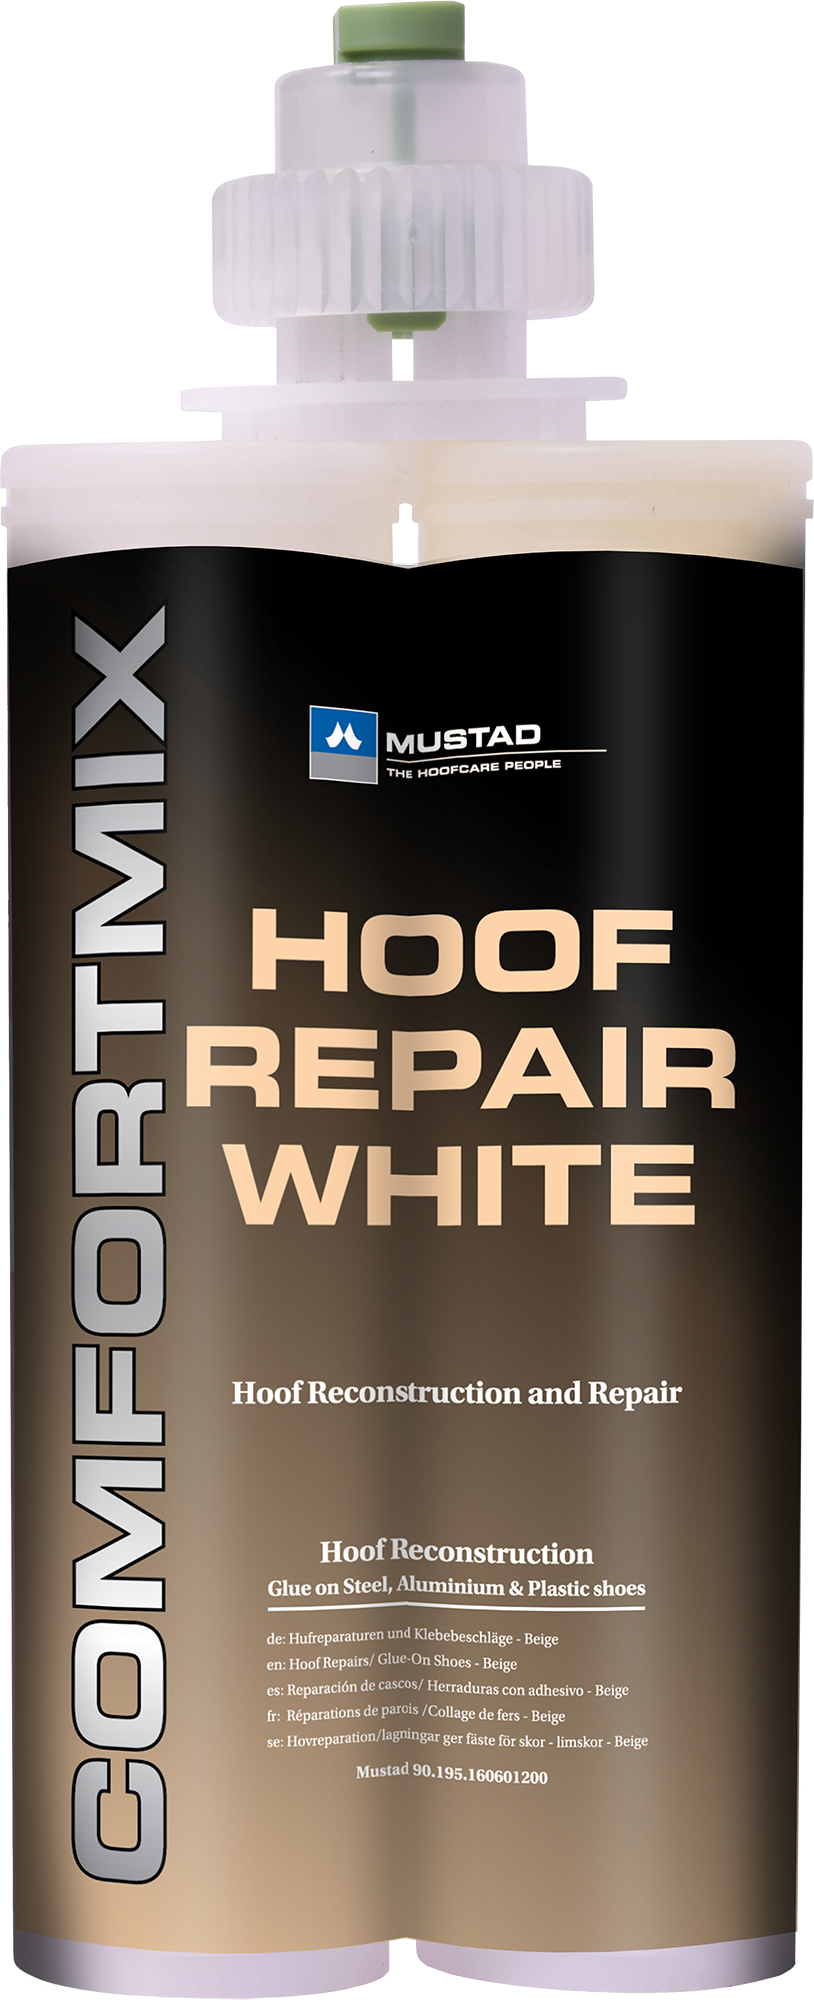 Comfort Mix Hoof Repair White